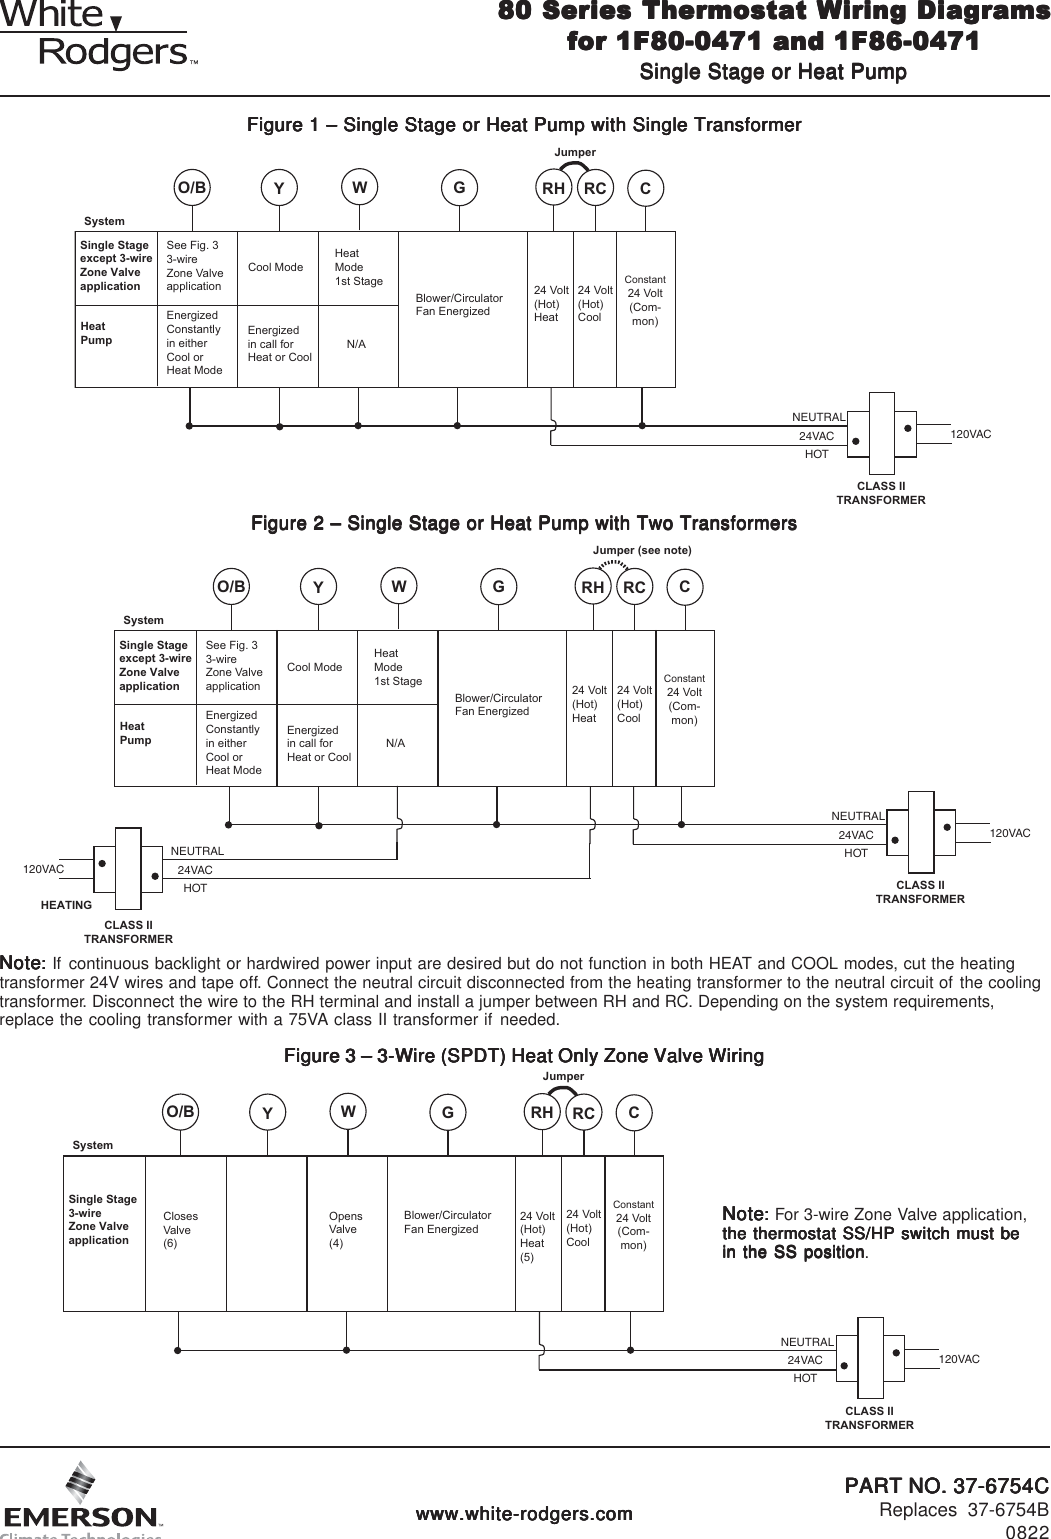 Diagram White Rodgers Wiring Diagram Advanced Full Version Hd Quality Diagram Advanced Turbodiagrams Belen Rodriguez It